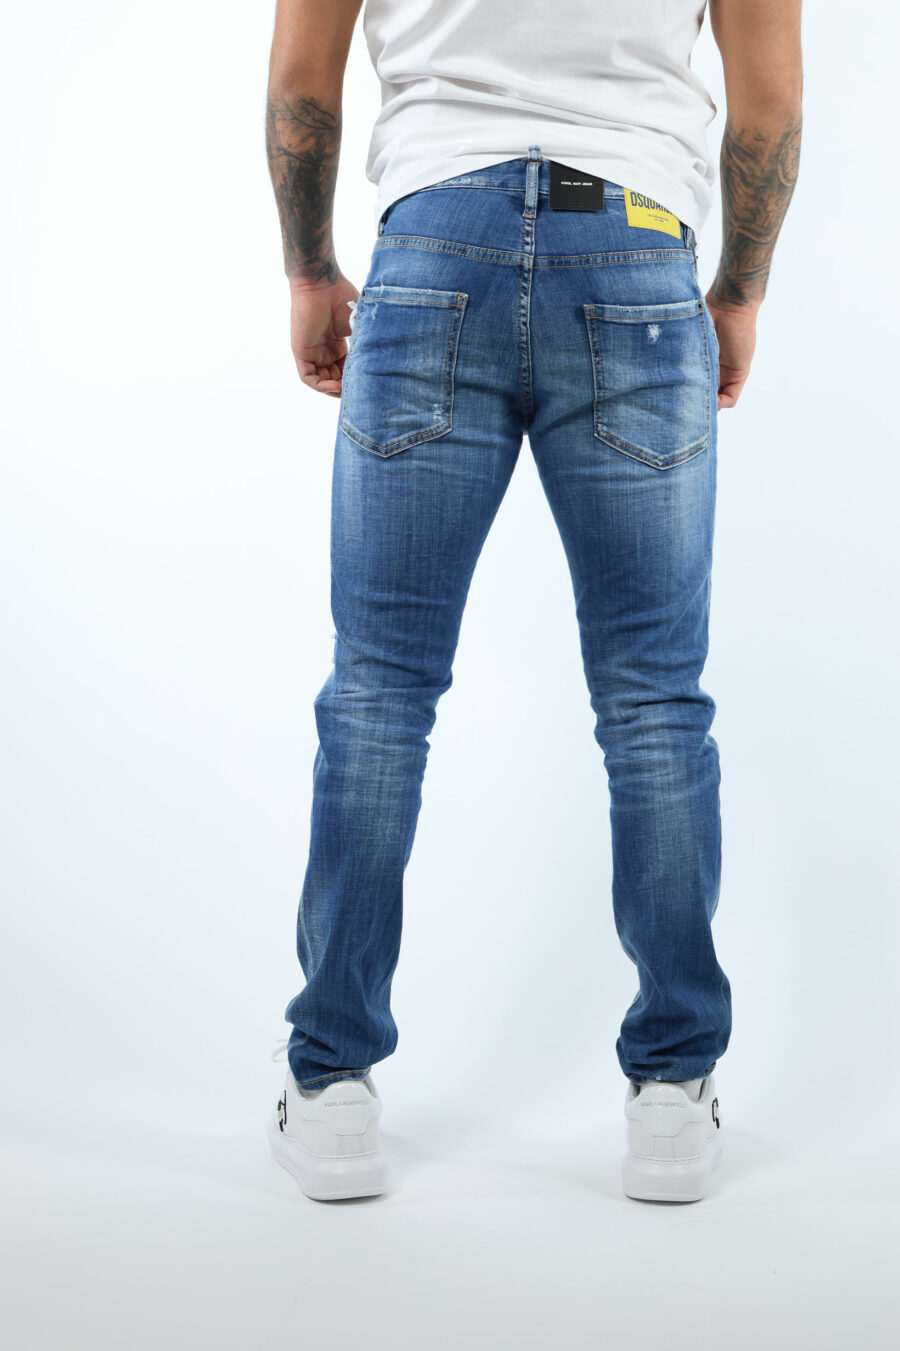 Pantalon bleu clair "cool guy jean" semi-fendu et semi-usé - 8054148313456 2